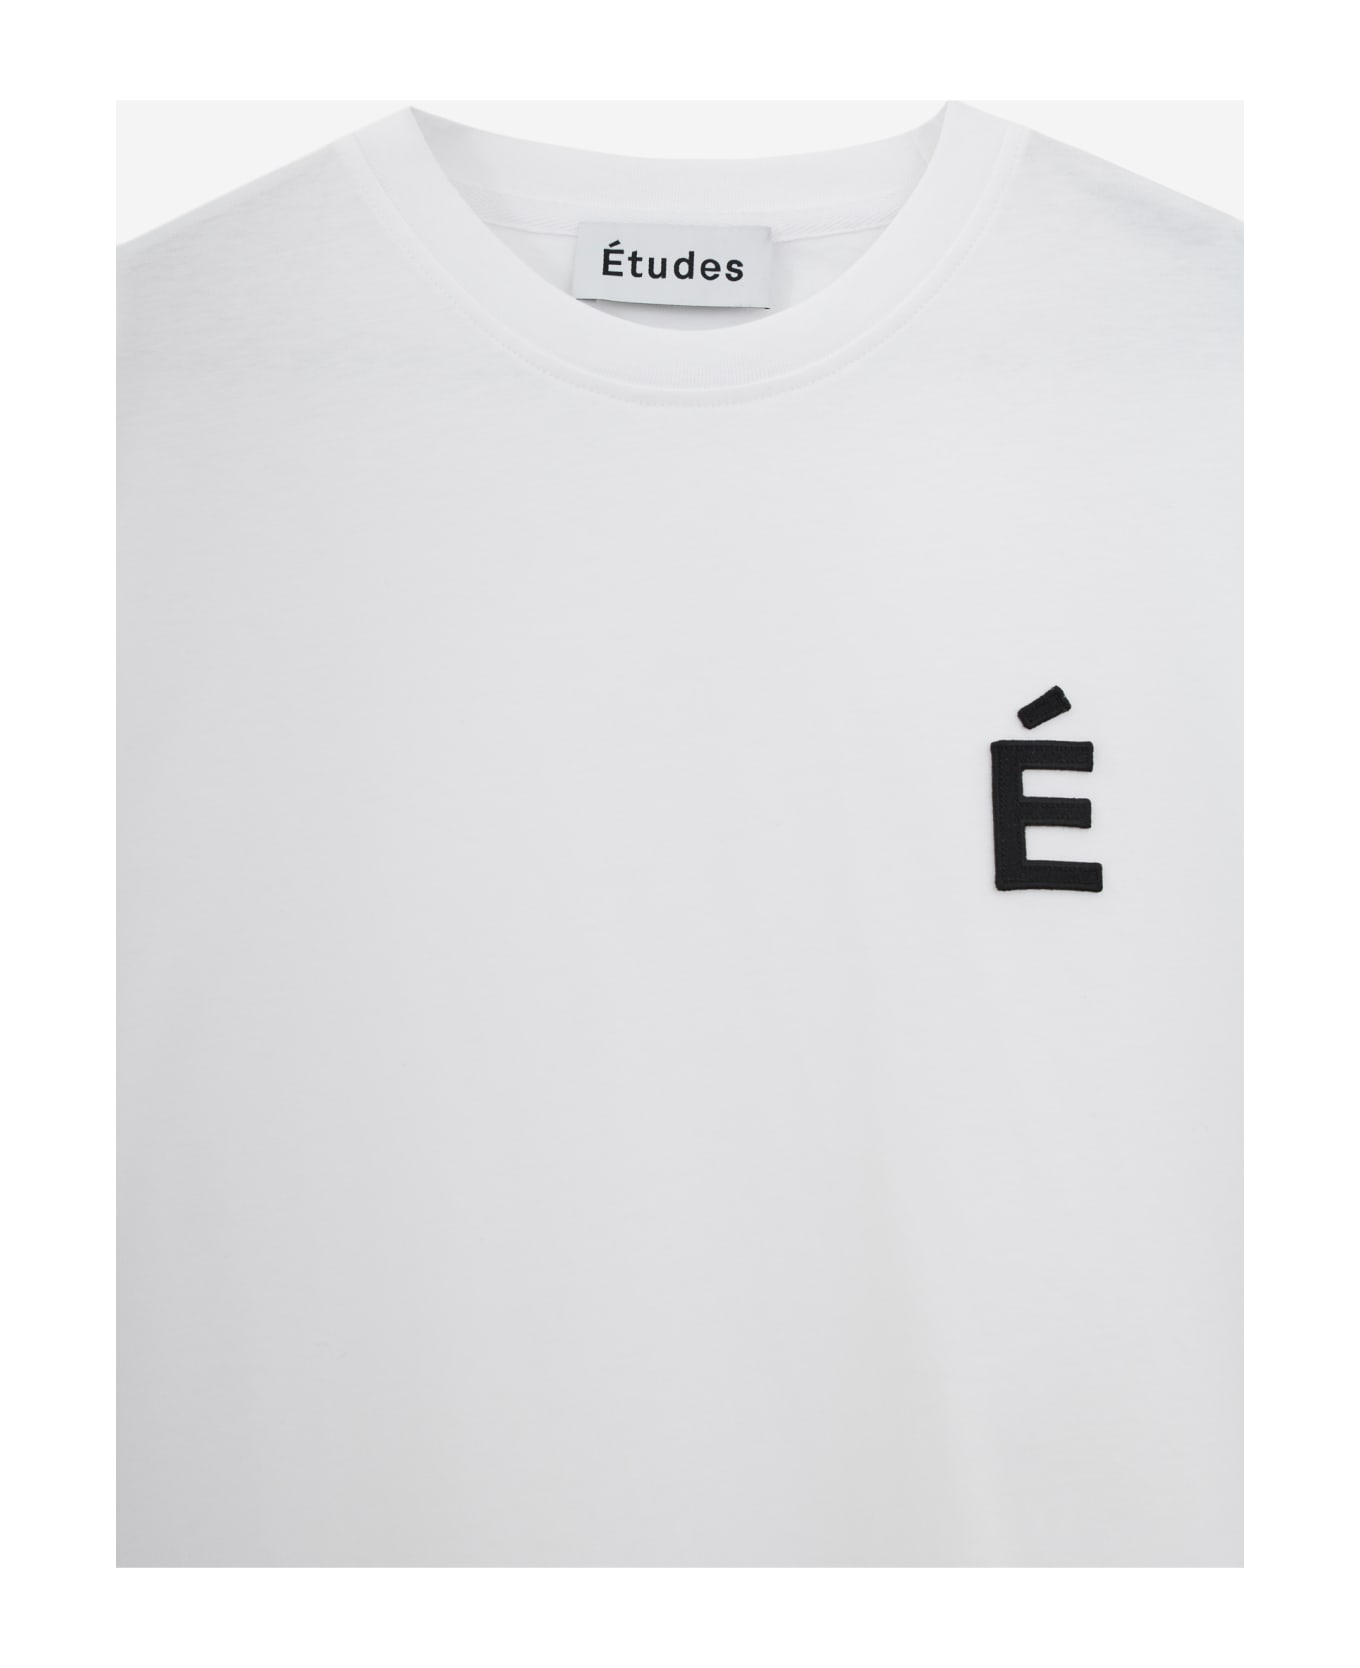 Études Wonder T-shirt - white